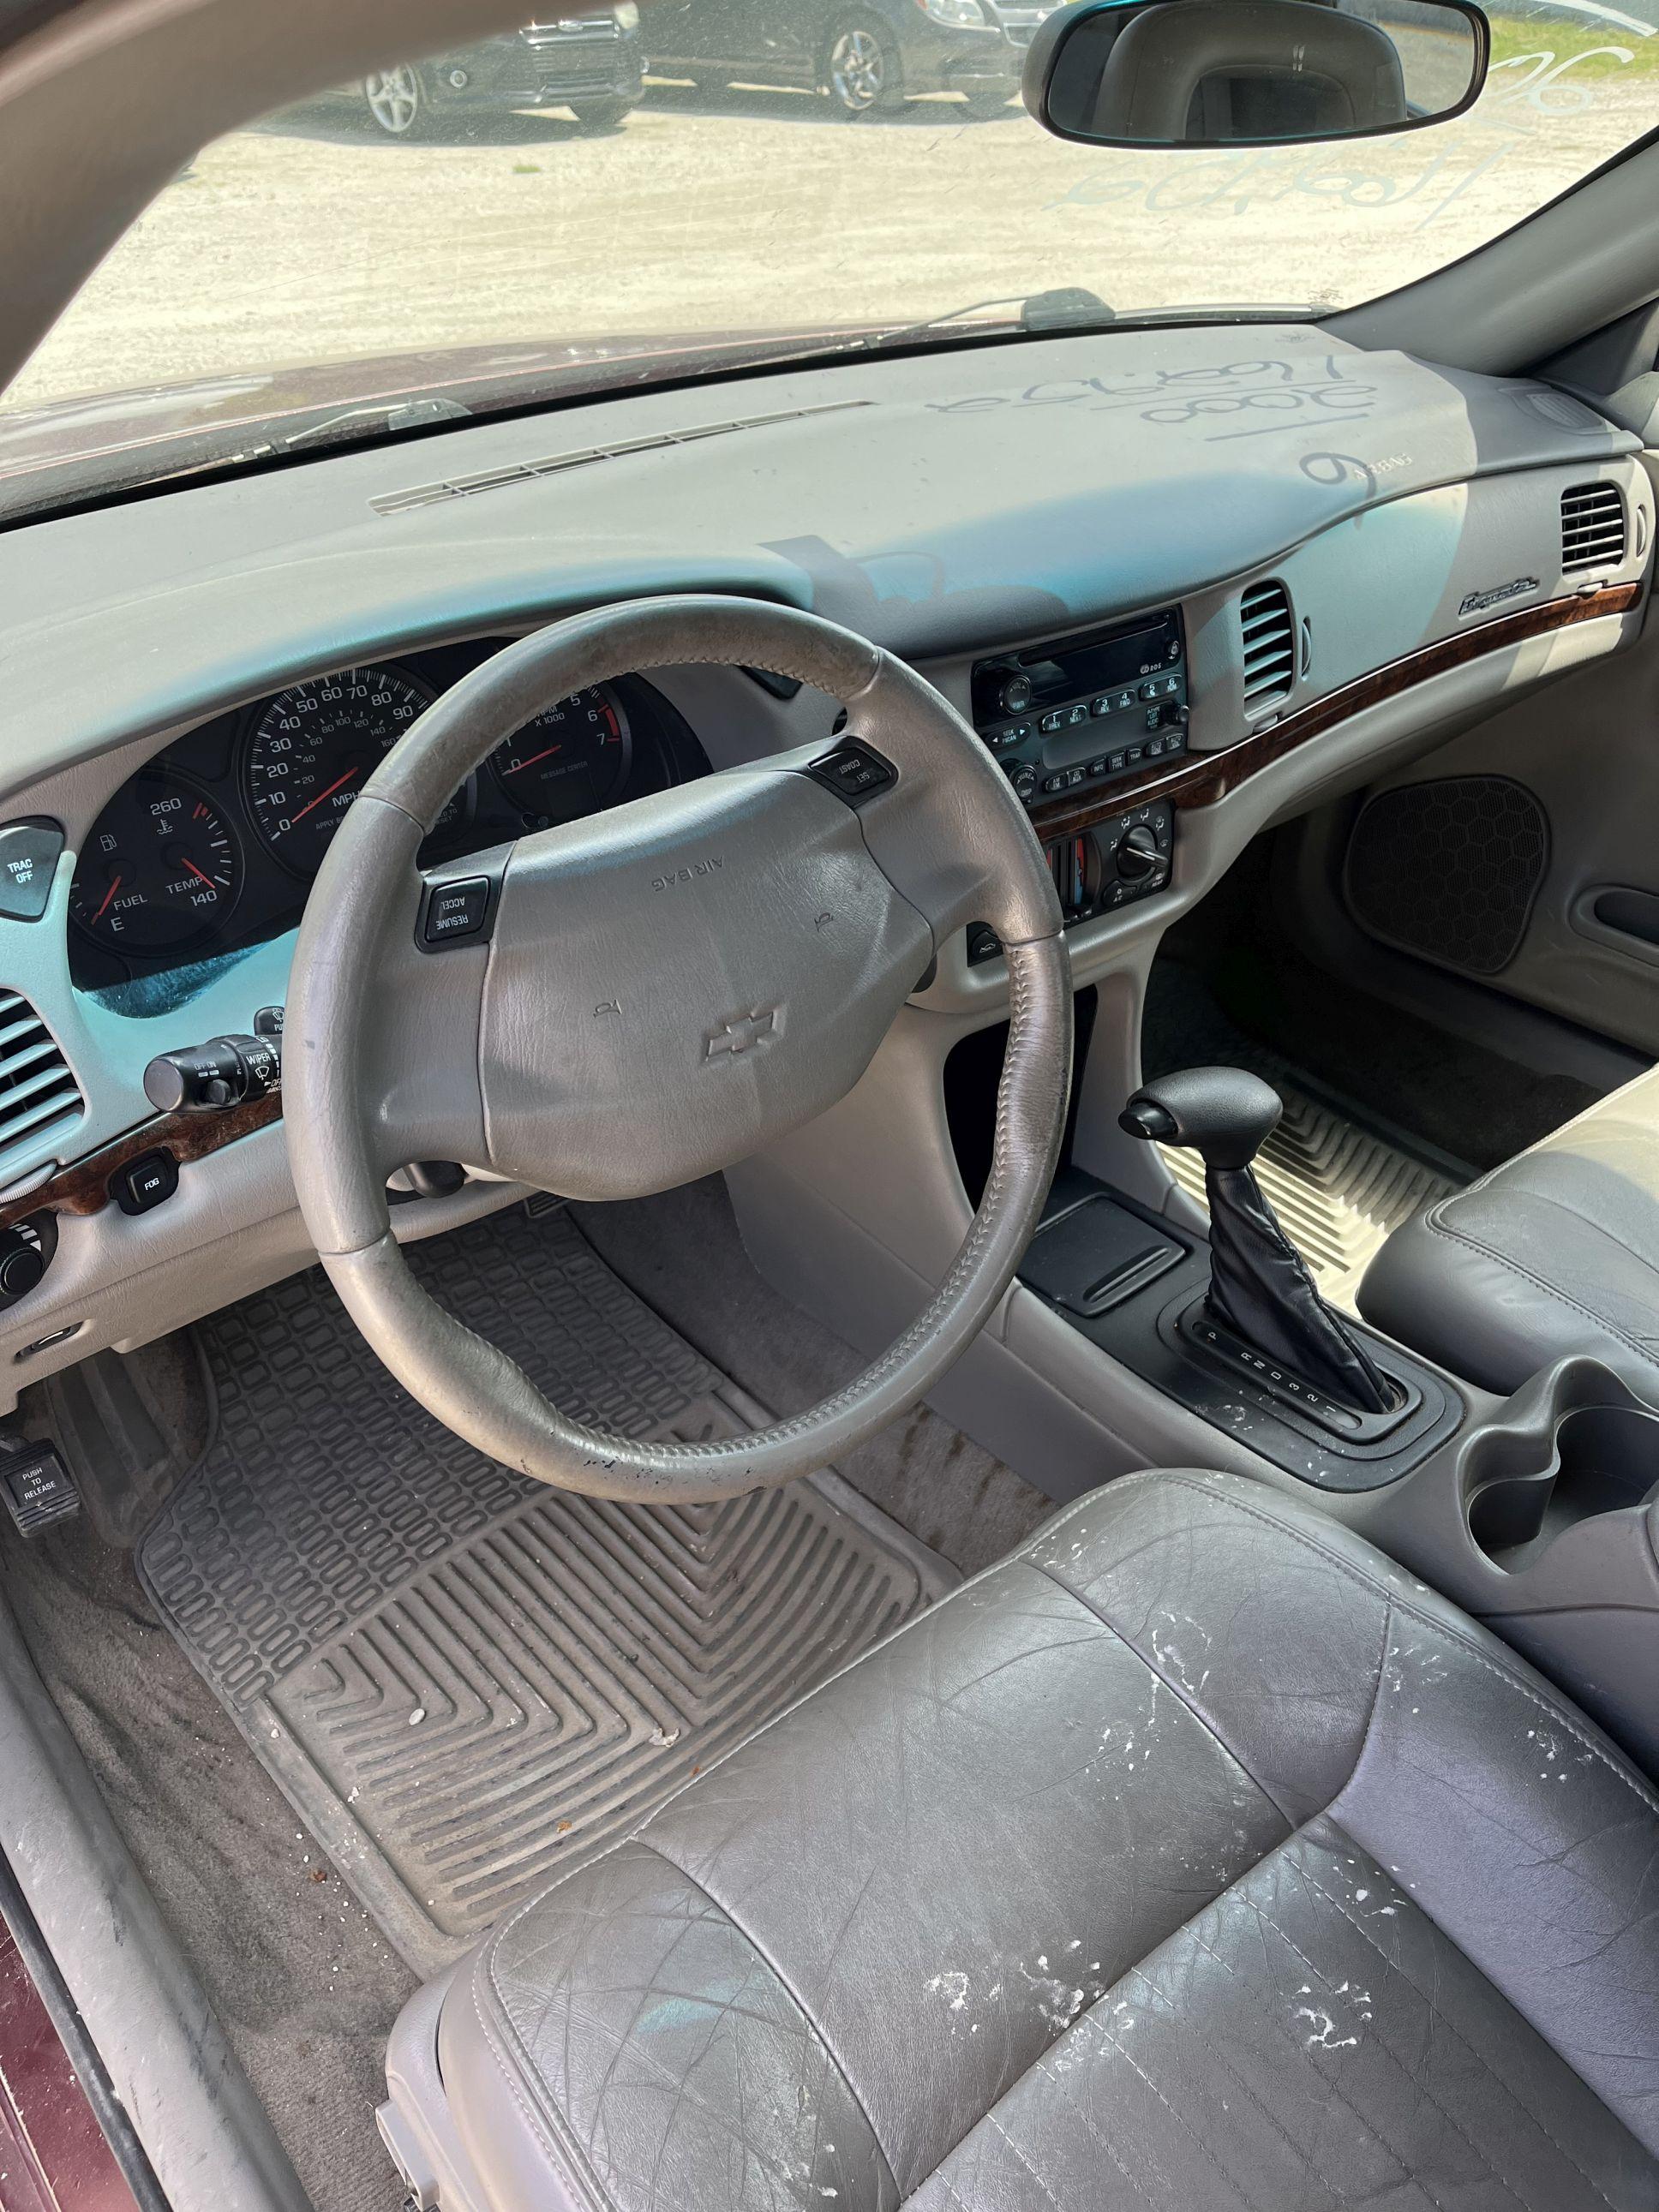 2000 Chevy Impala LS